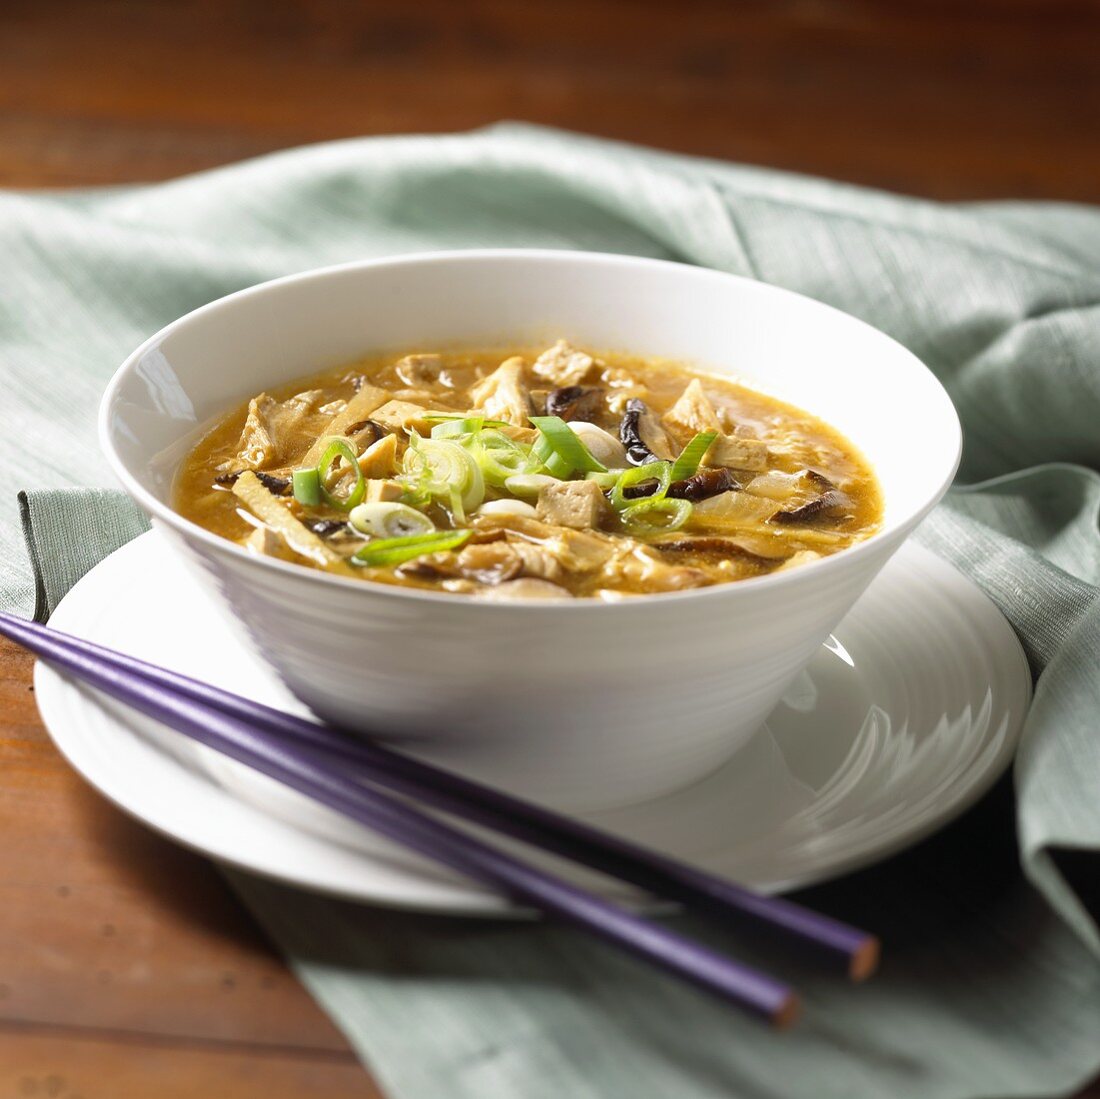 Bowl of Hot and Sour Soup; Chopsticks